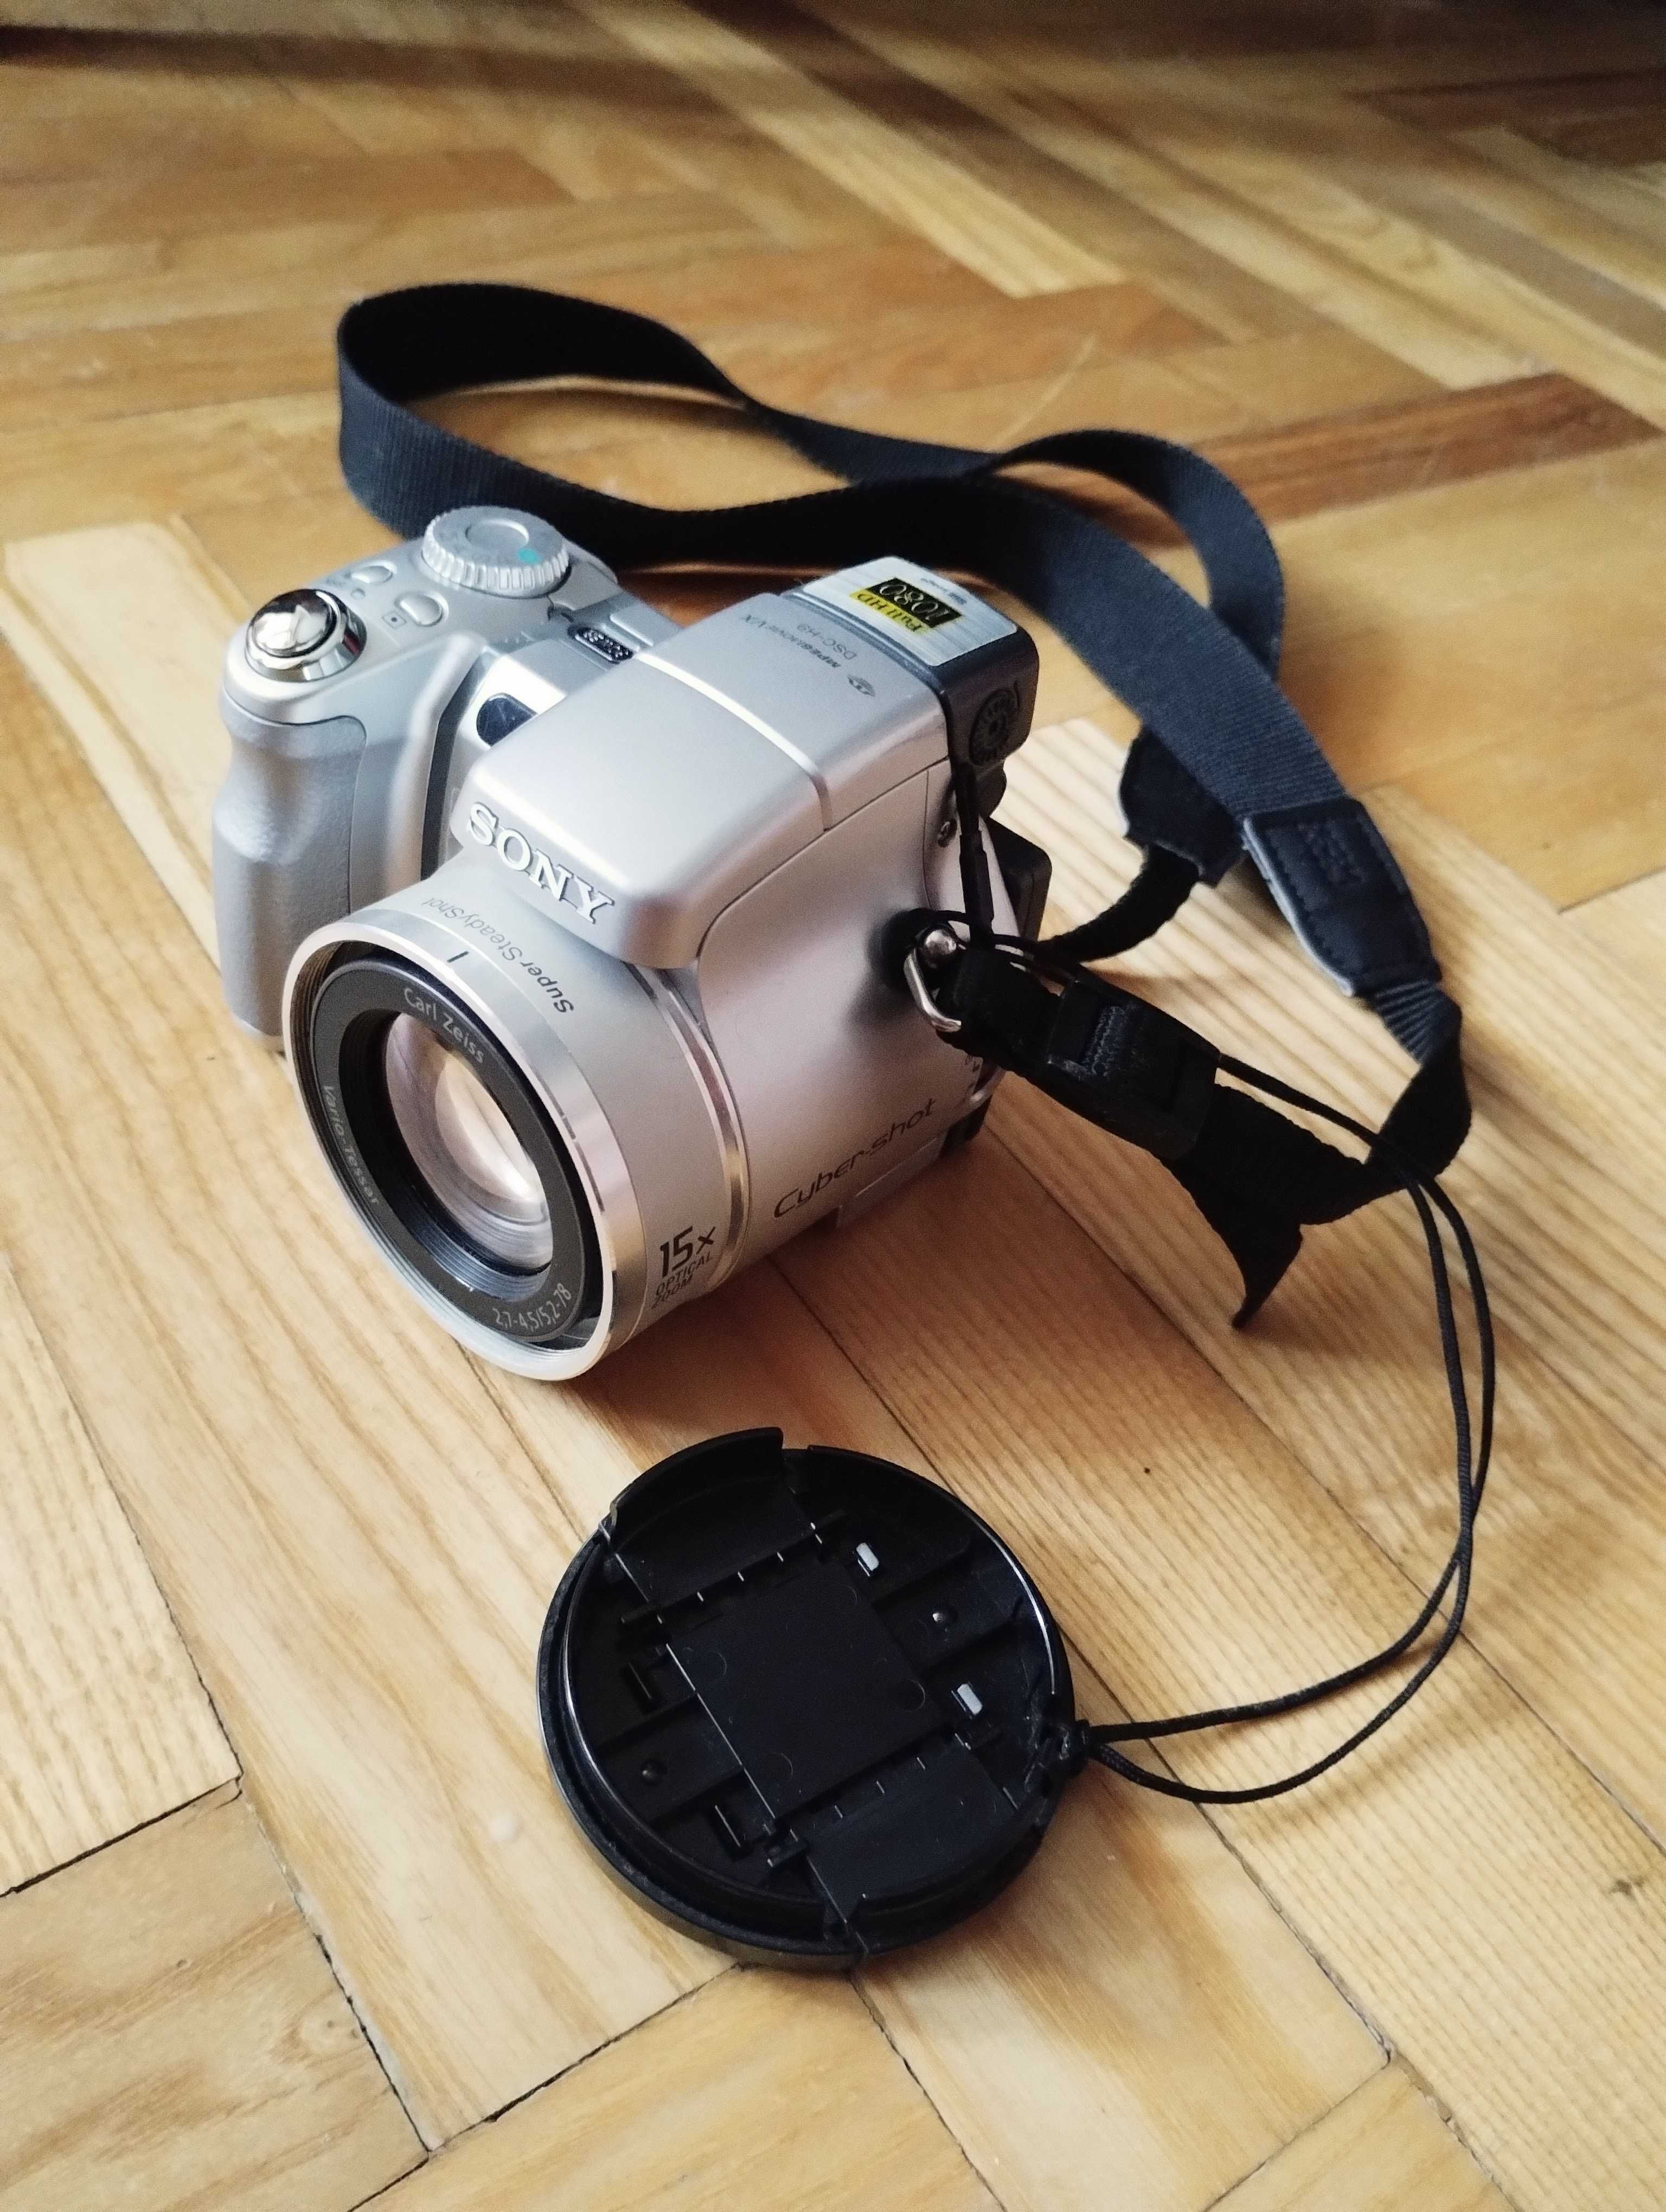 Фотоаппарат SONY DSC-H9 Cyber-shot, 8.1 Mpx